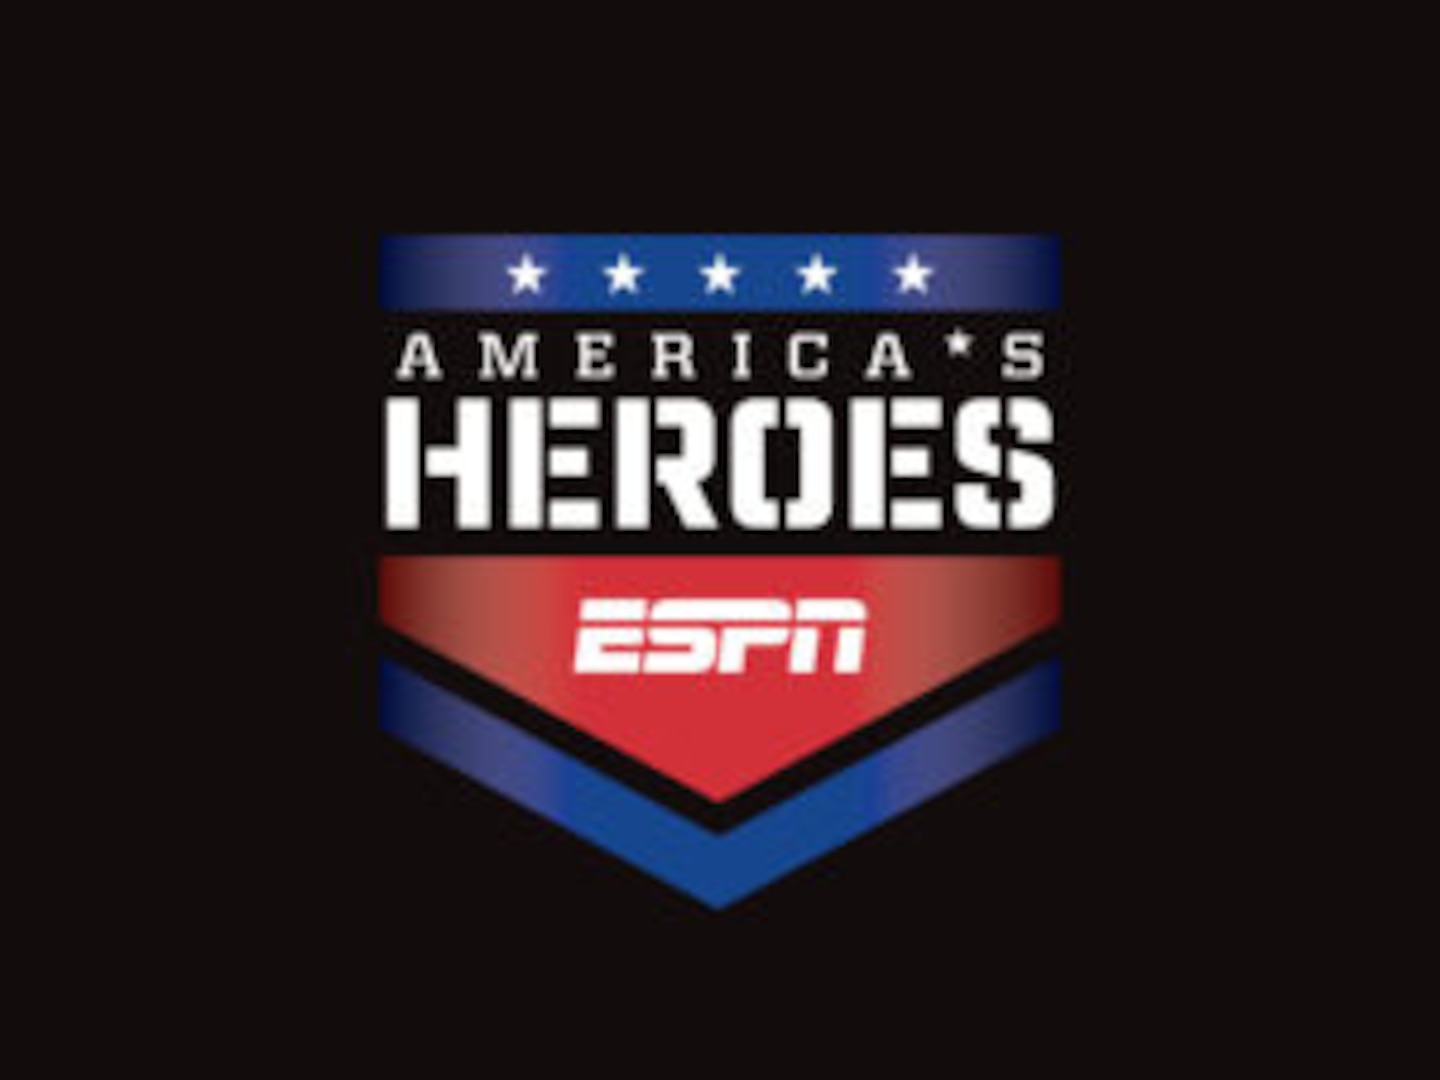 America's Heroes - ESPN logo